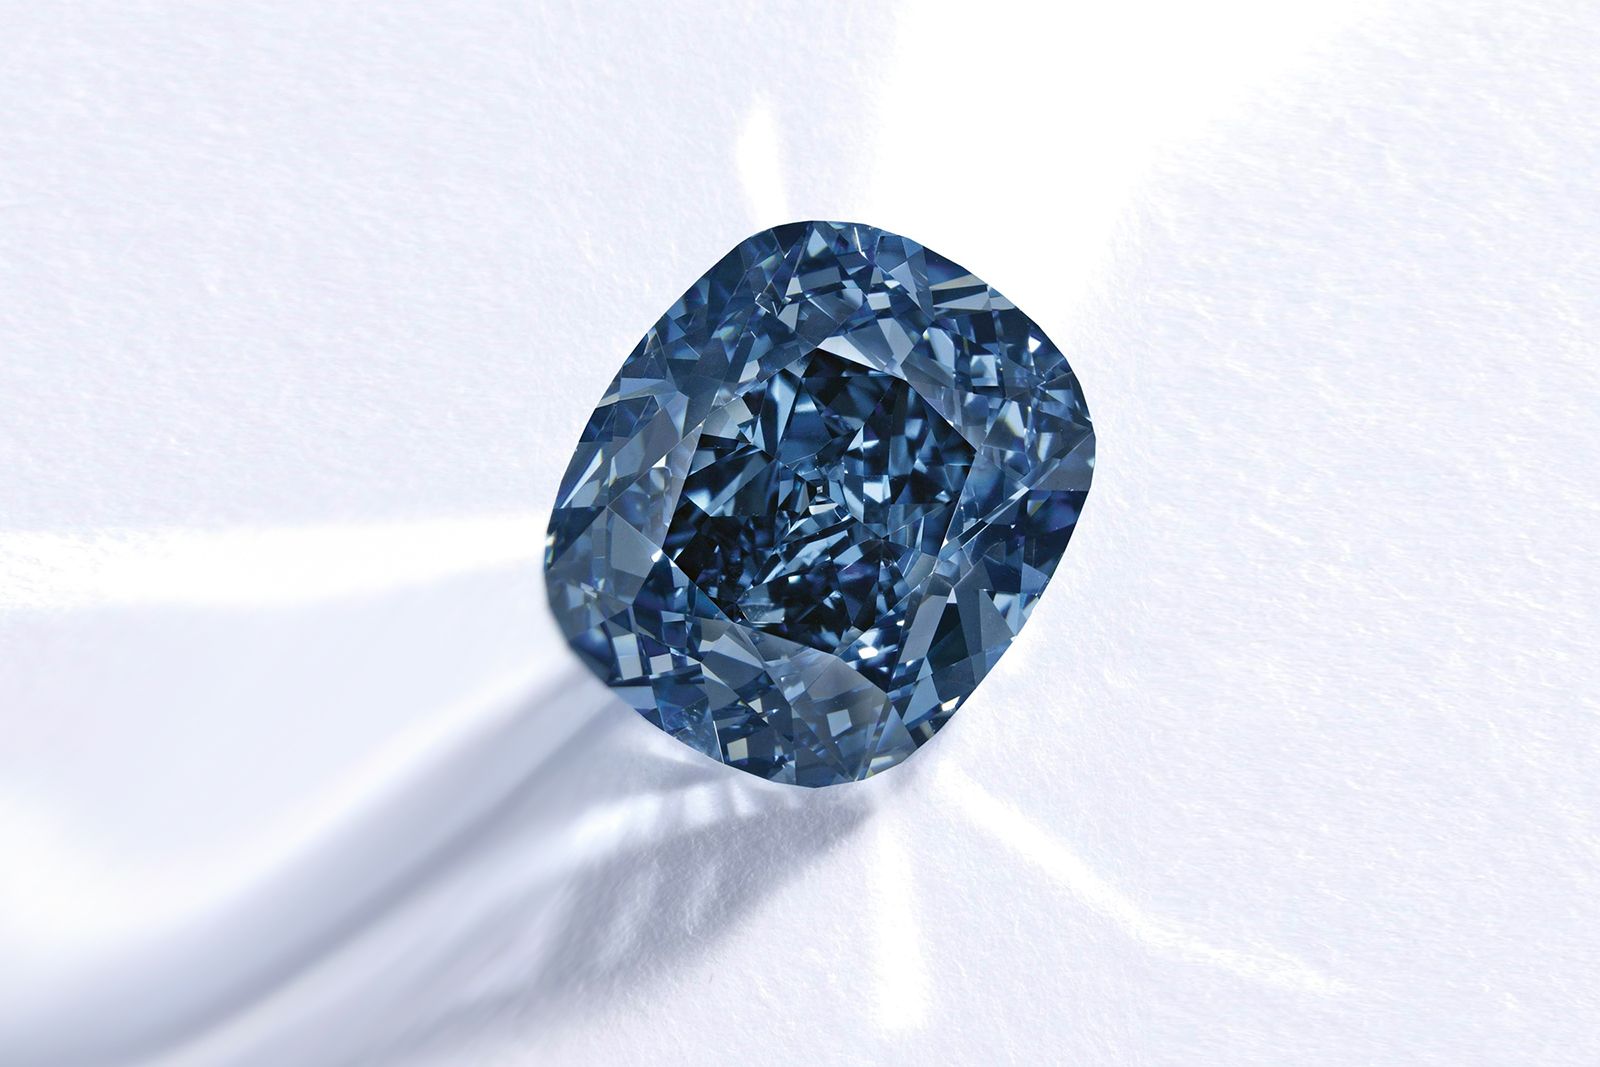 The 12.03 carat internally flawless 'Blue Moon of Josephine' diamond